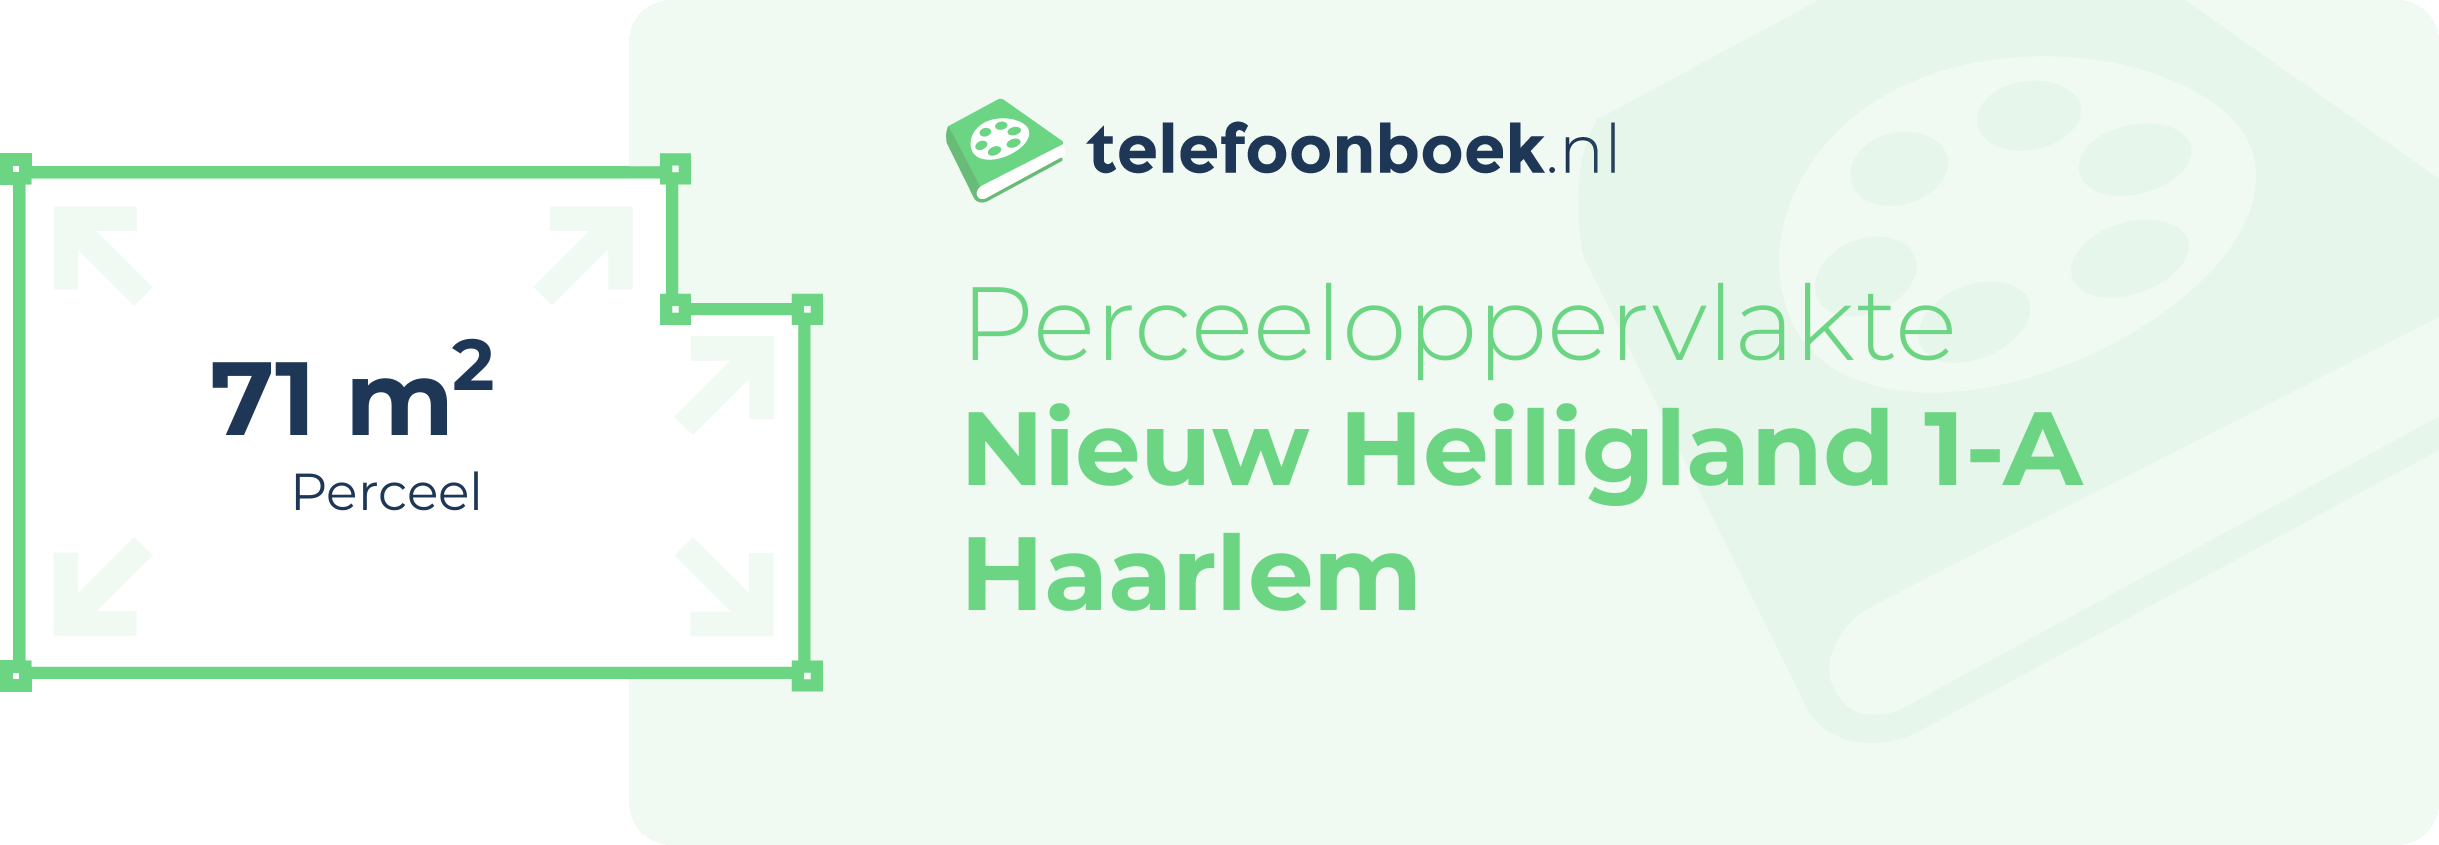 Perceeloppervlakte Nieuw Heiligland 1-A Haarlem